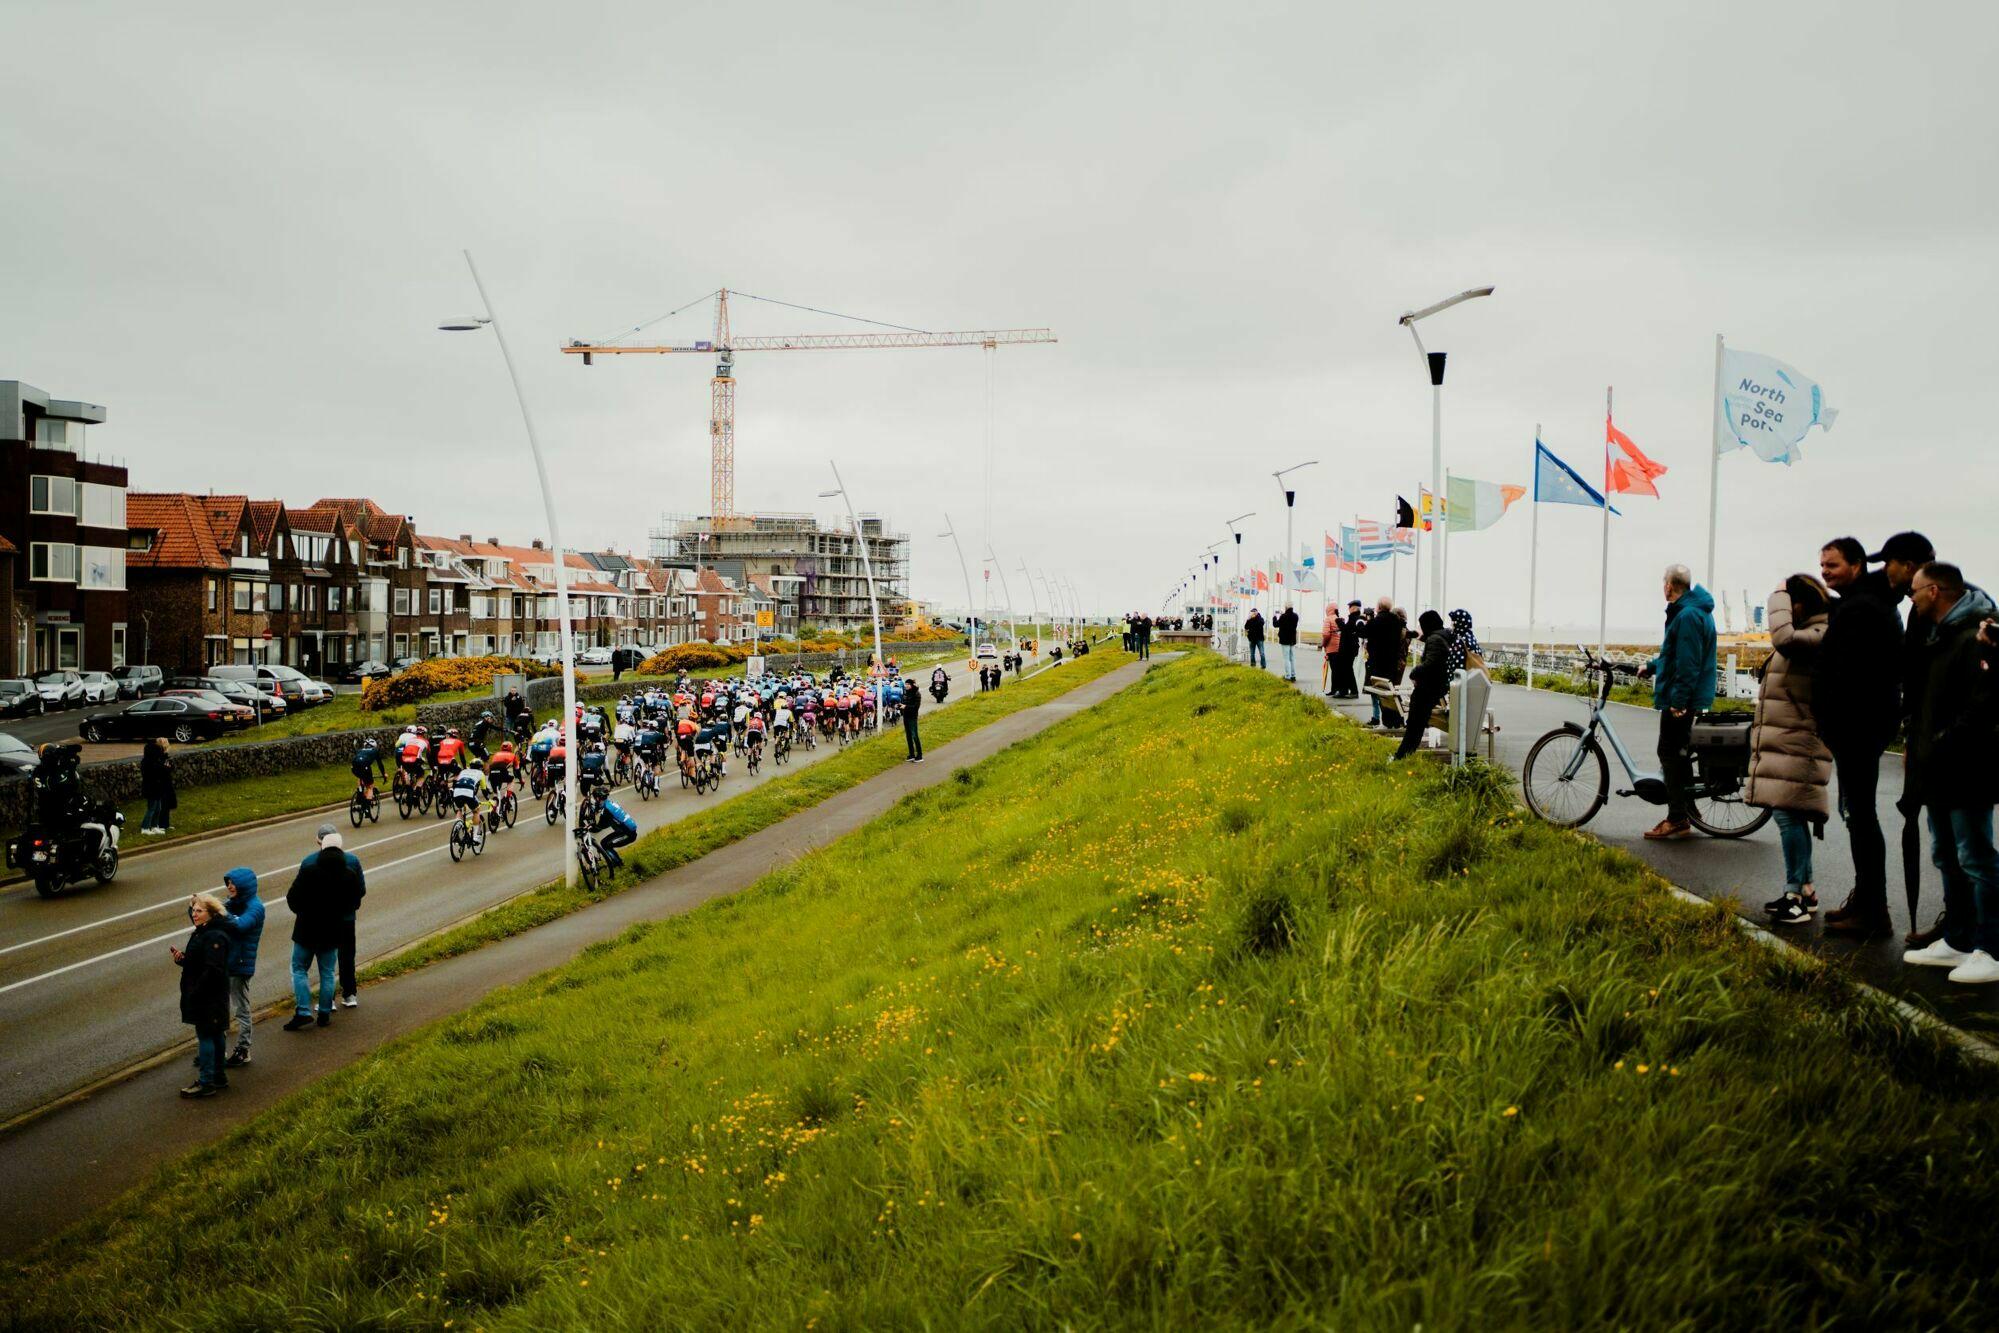 Municipality of Terneuzen celebrates anniversary edition of Scheldeprijs with free cycling café